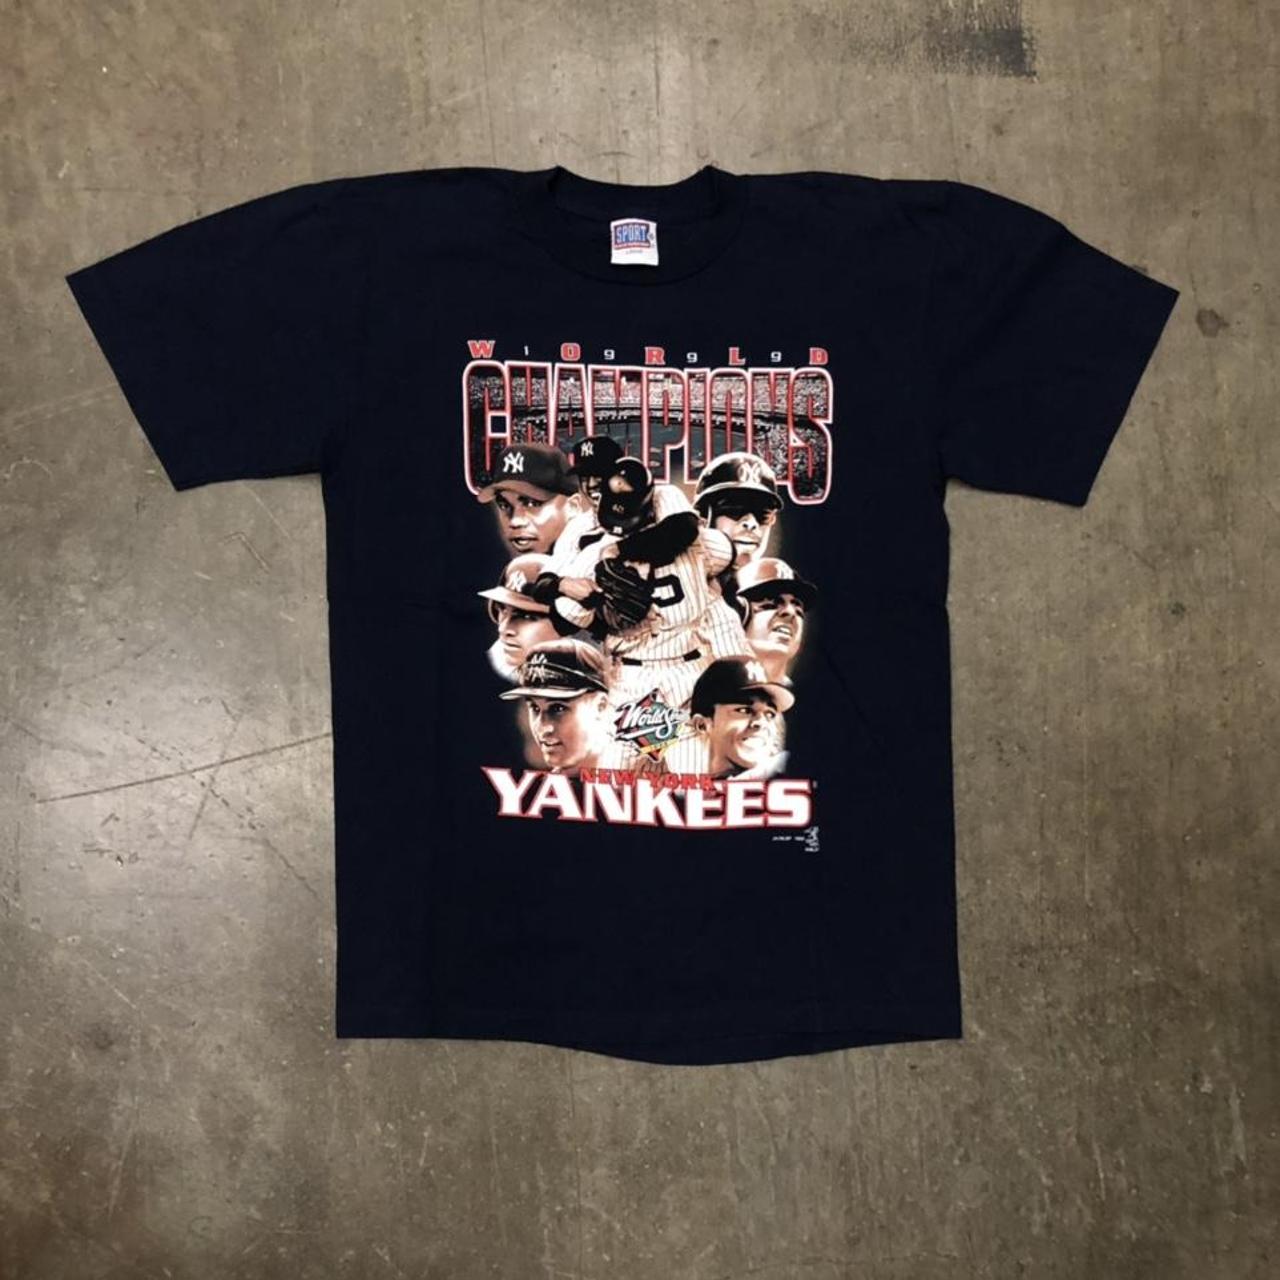 New York Yankees Derek Jeter jersey large #yankees - Depop